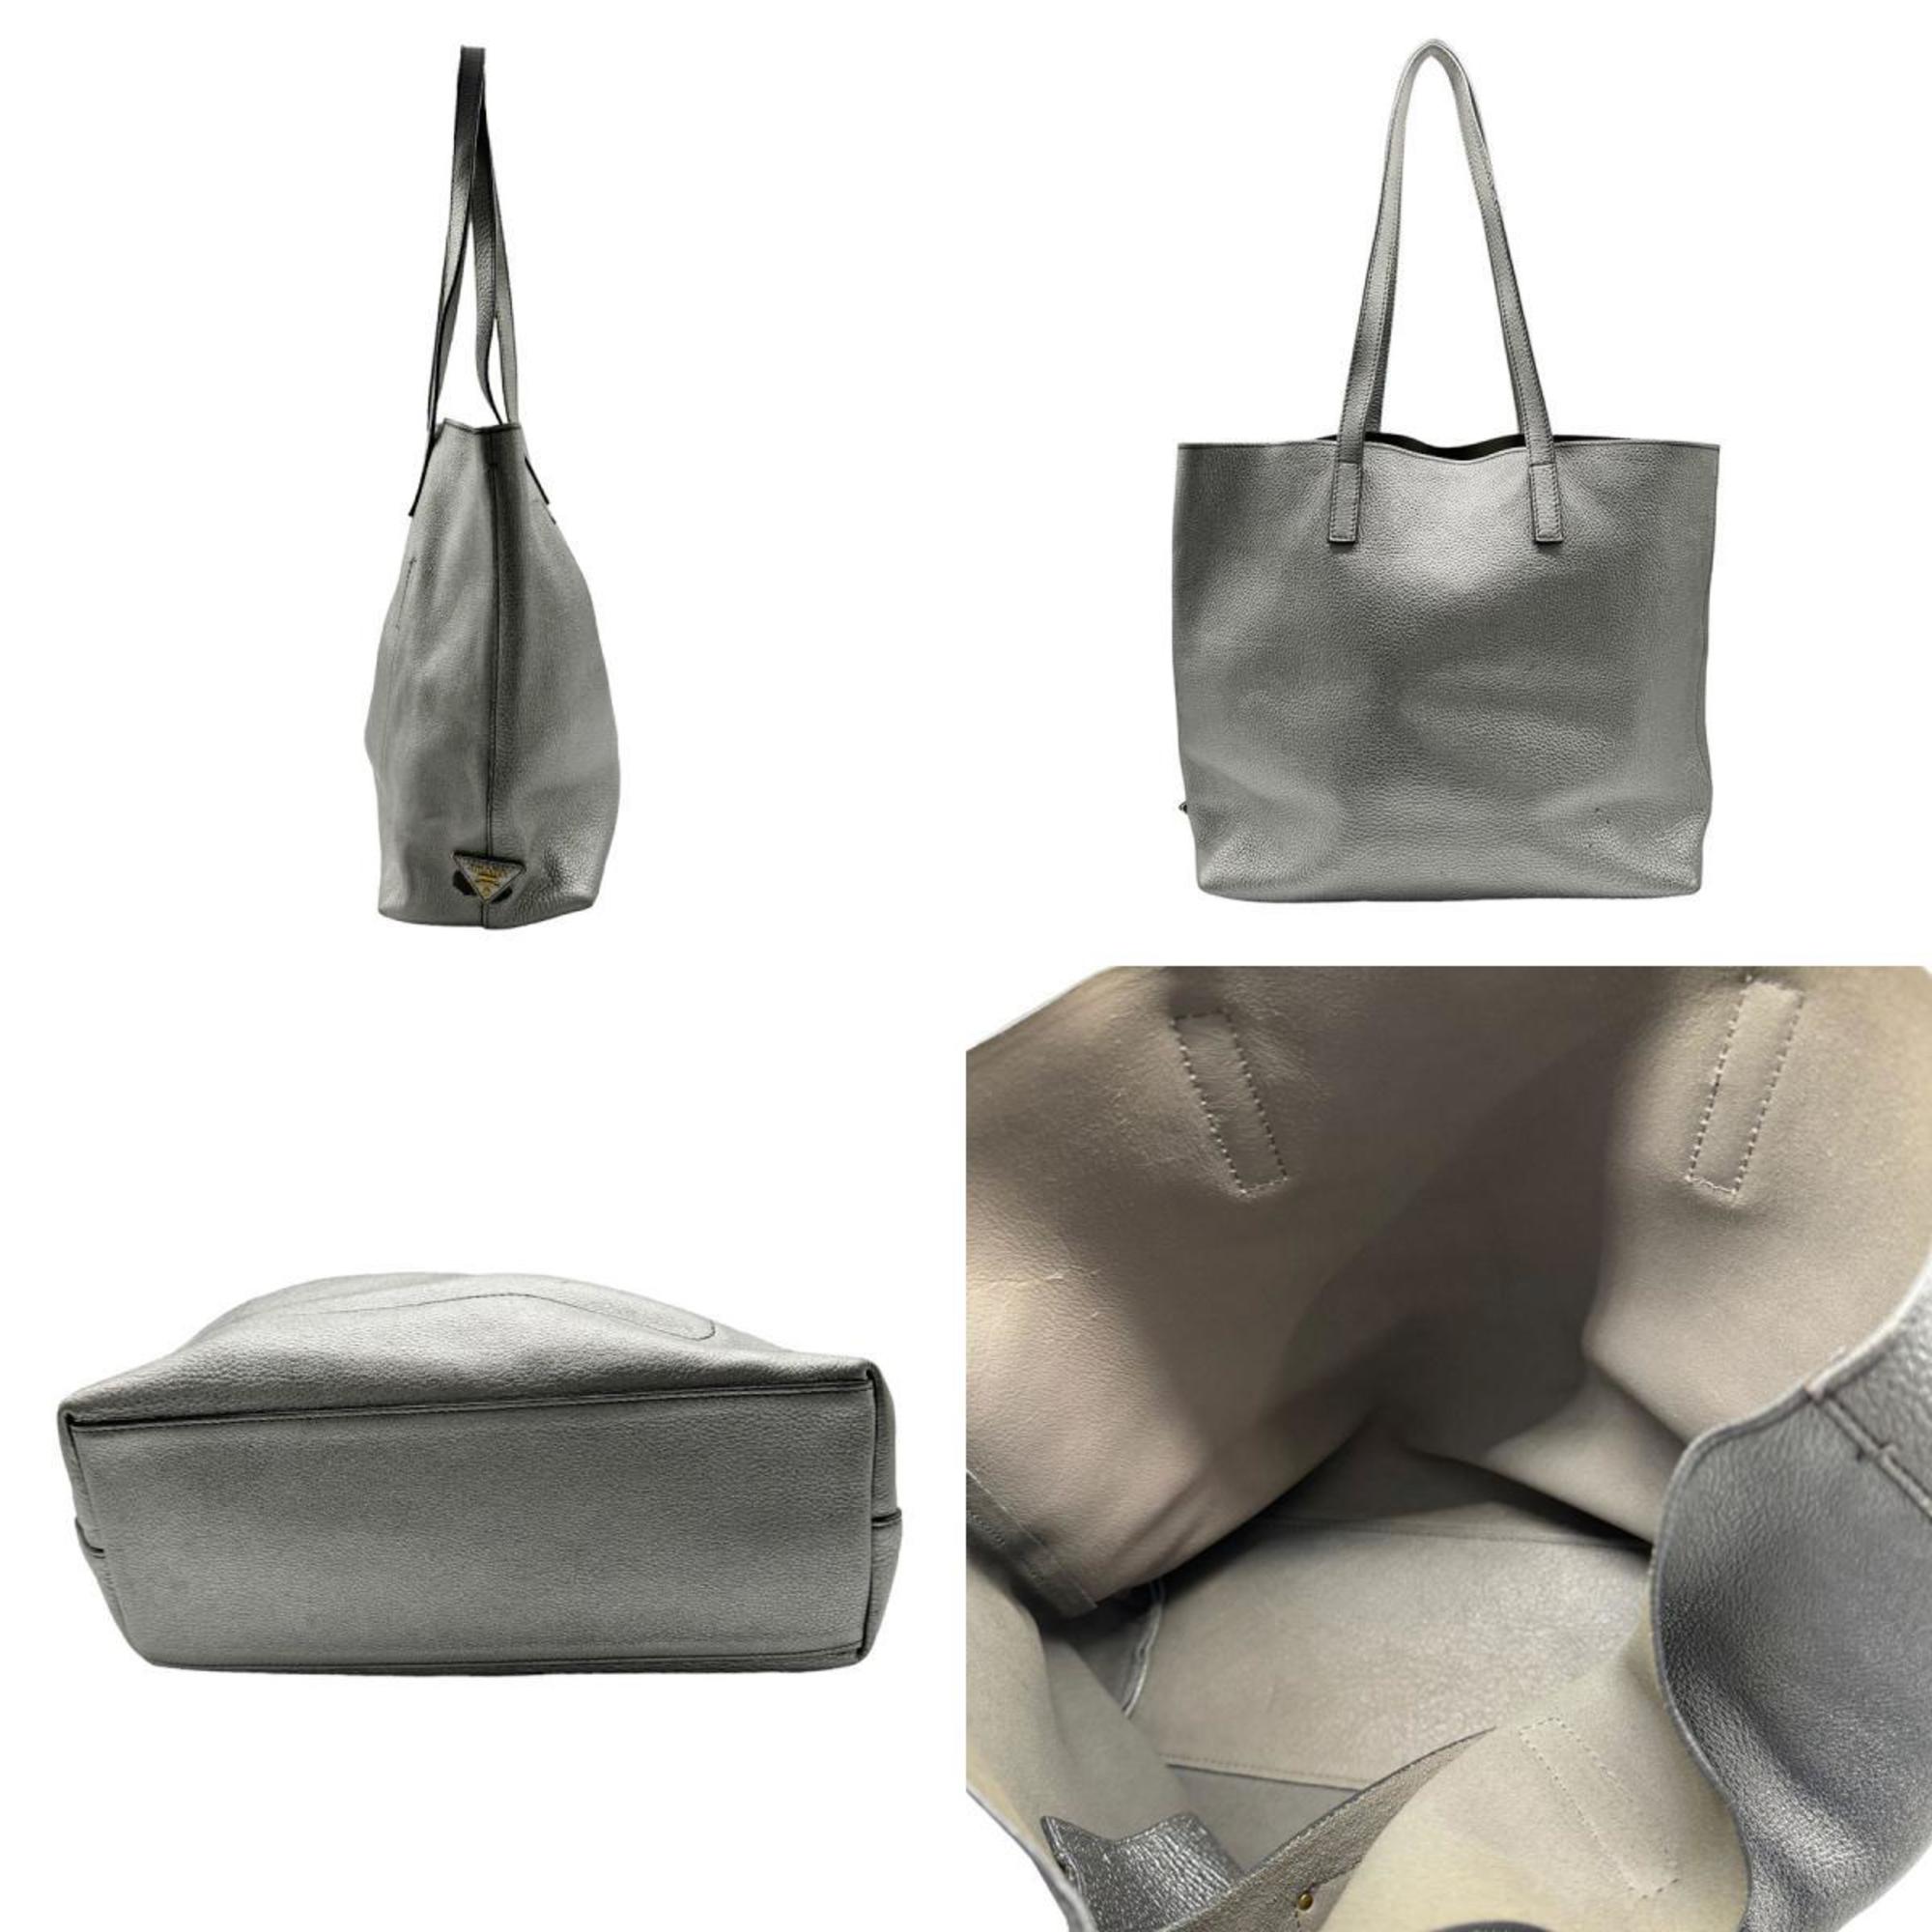 PRADA Shoulder Bag Tote Leather Silver Women's z0464